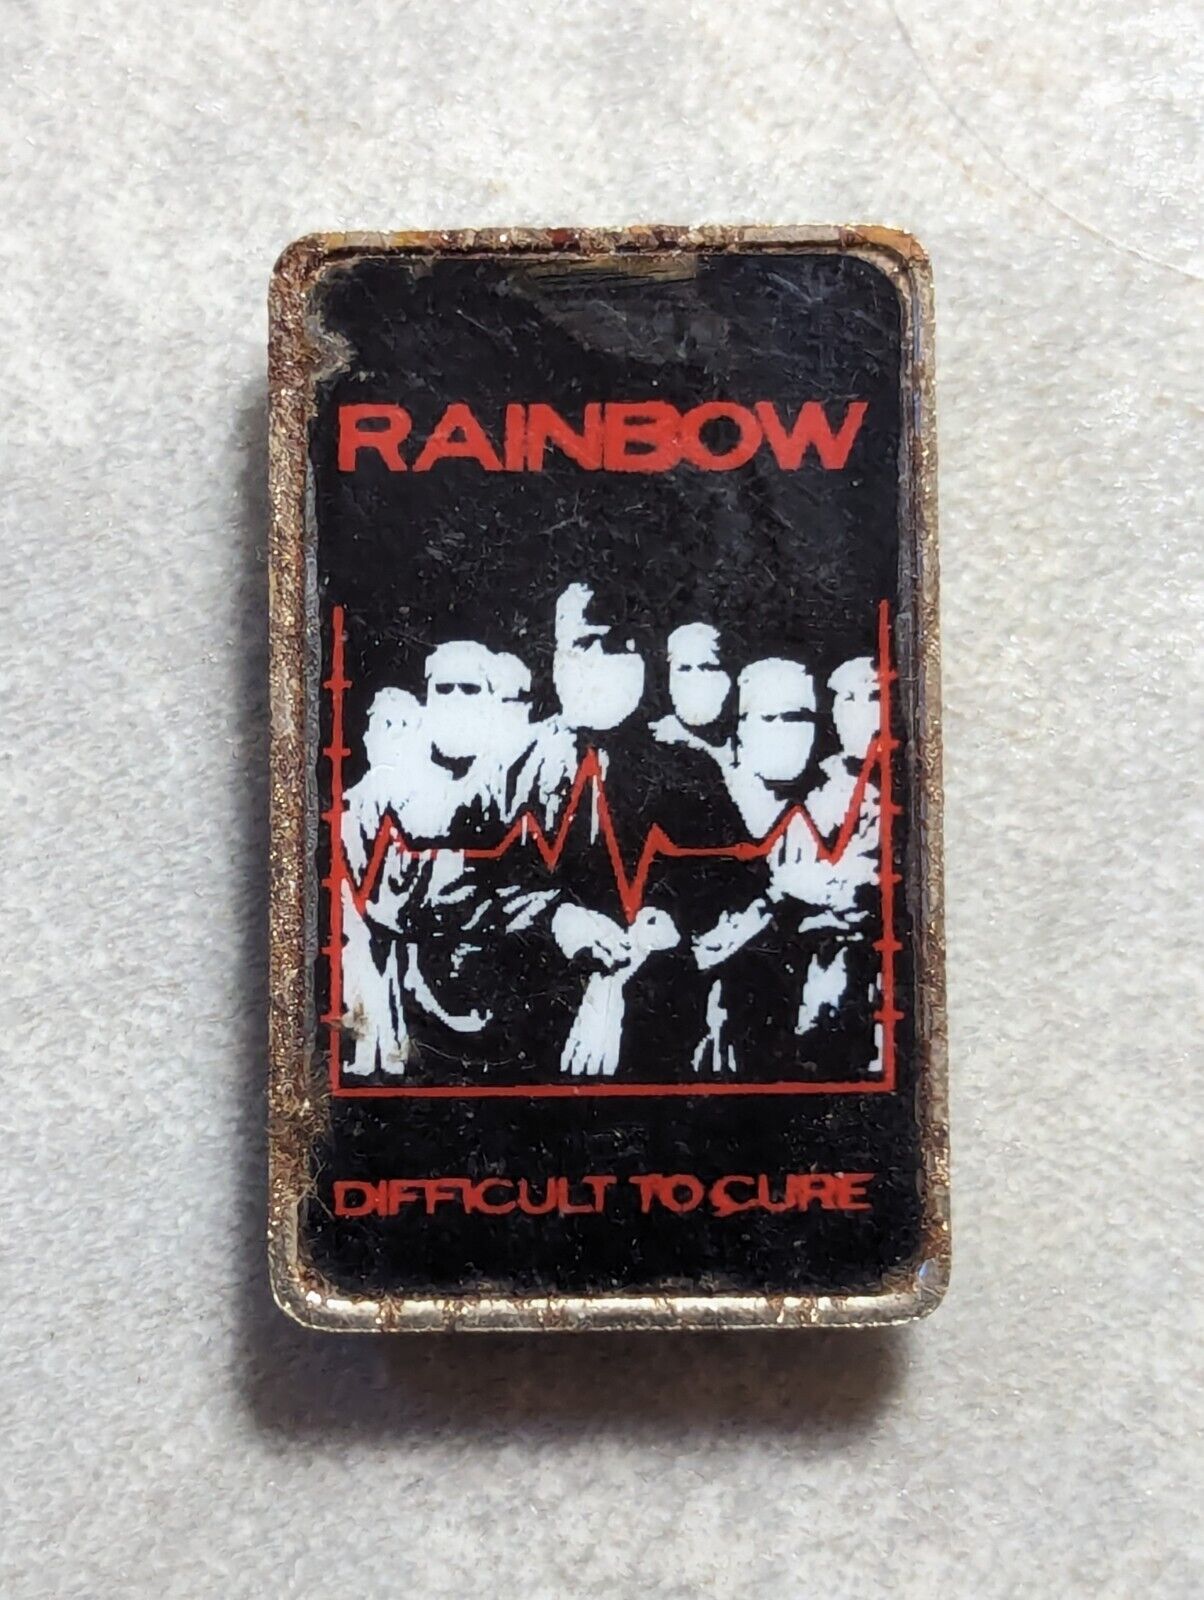 Vintage 80s Rainbow PIN BADGE Purchased Around 1986